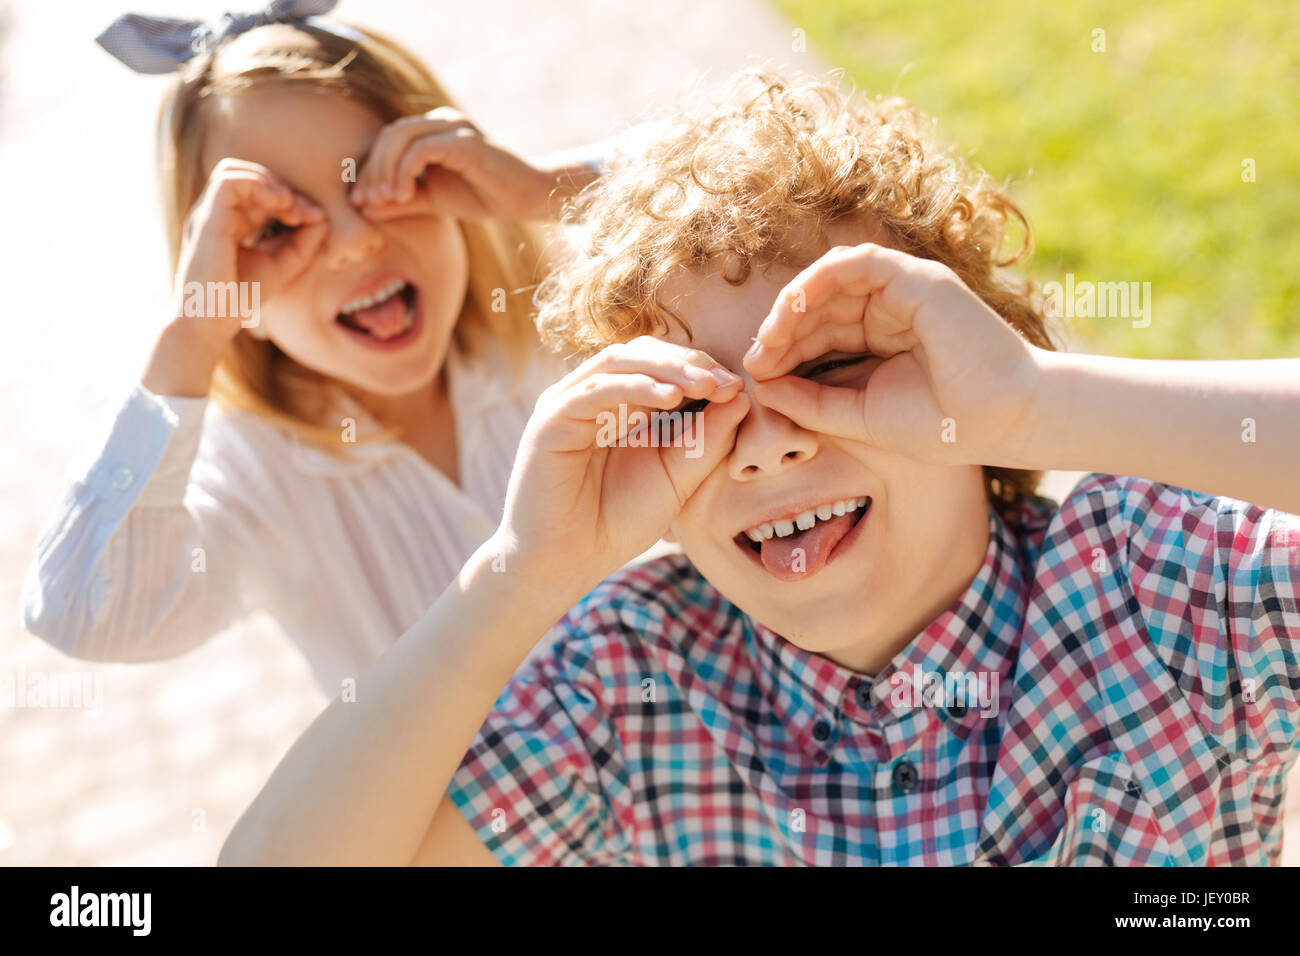 Positive children posing on camera with pleasure Stock Photo